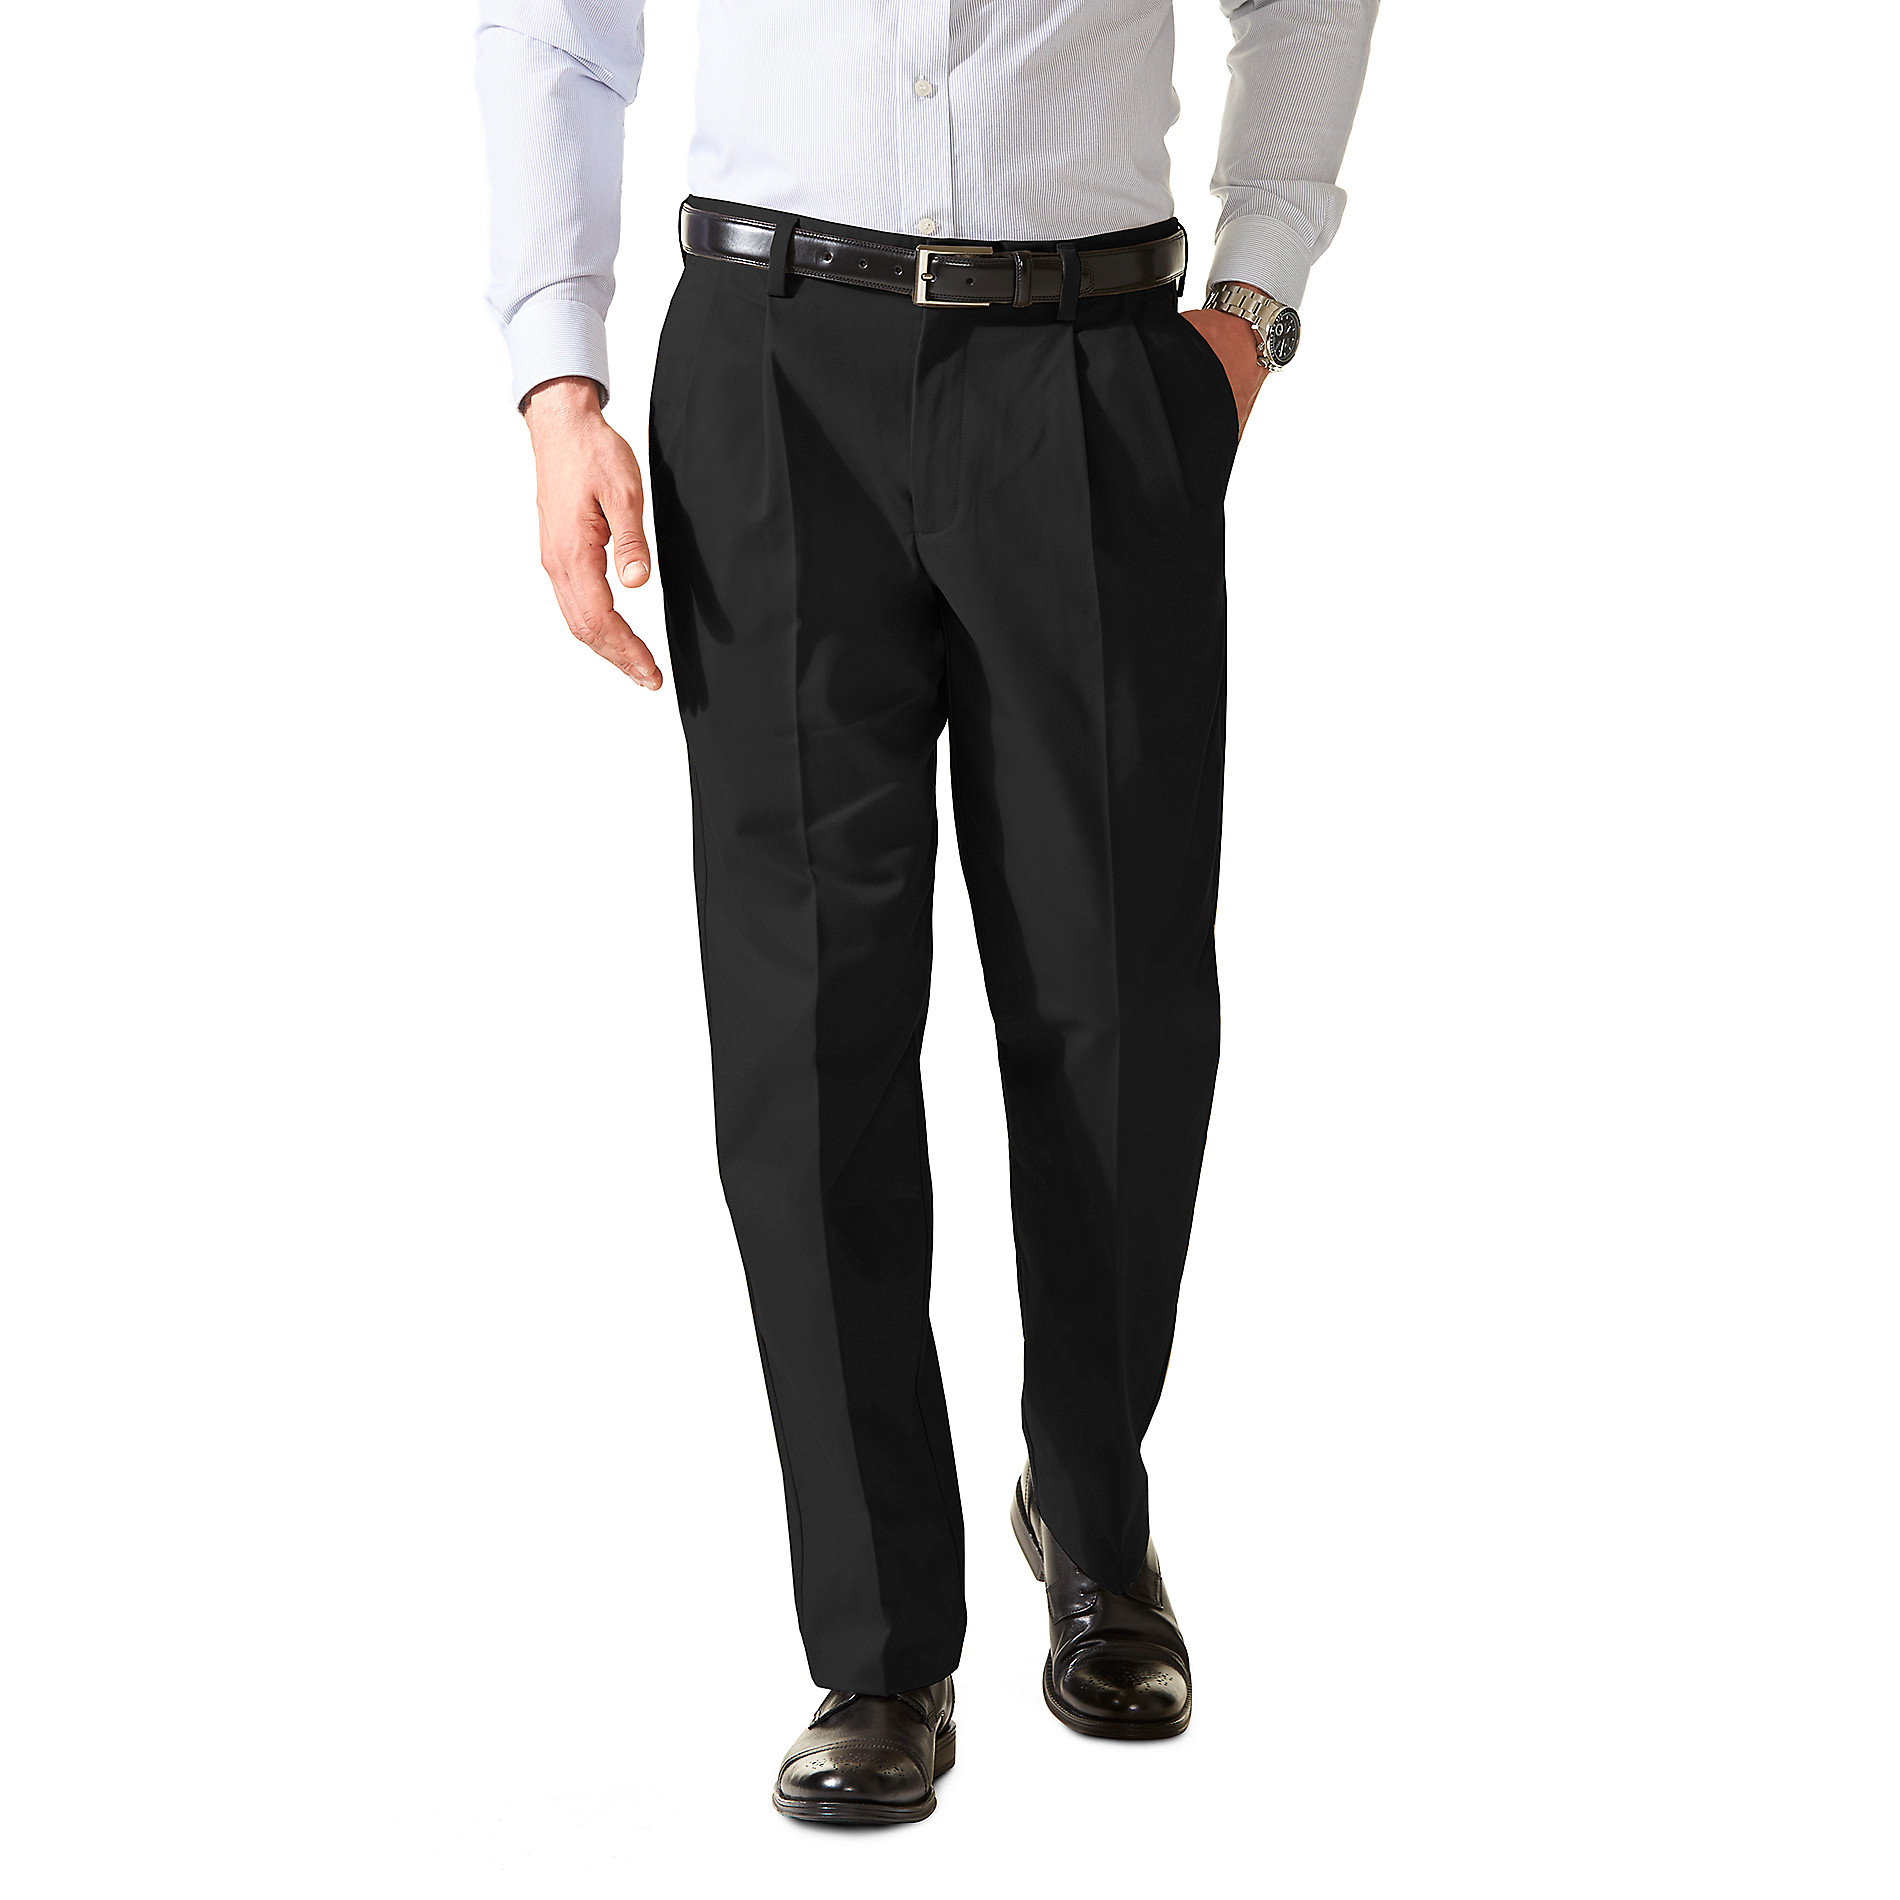 Dockers Men's Classic Fit Easy Khaki Pants - Pleated D3